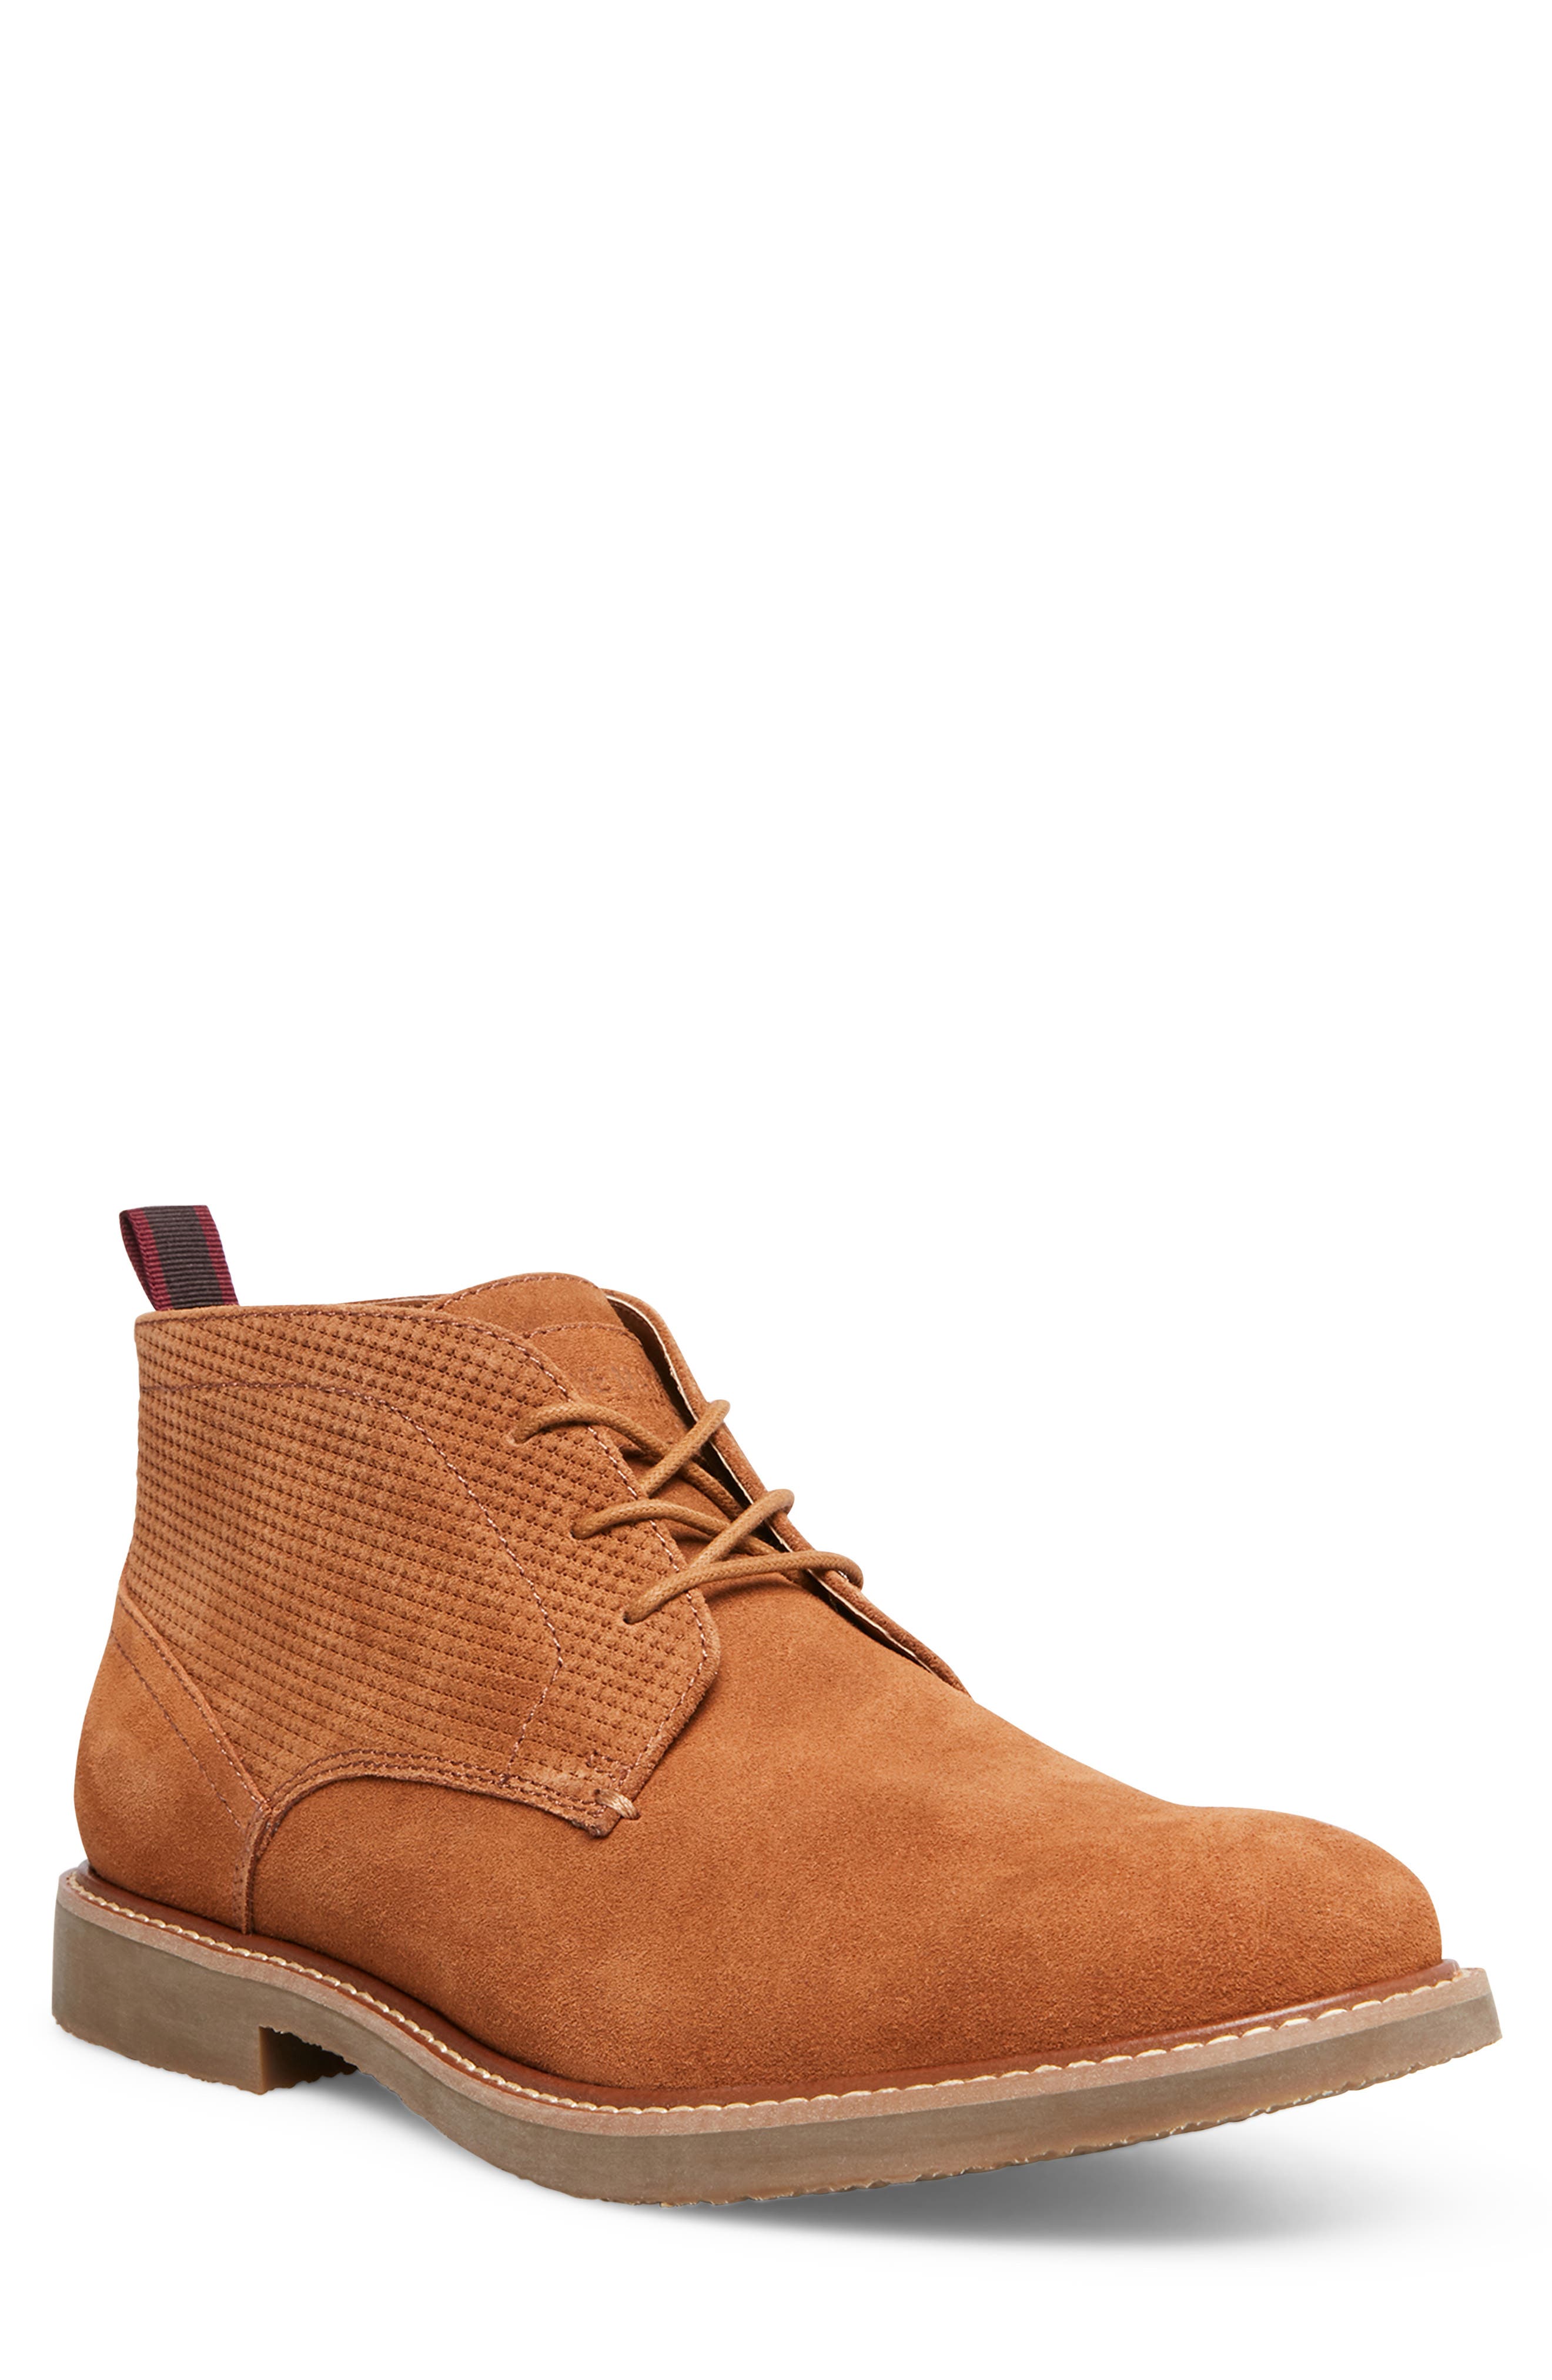 Men's Boots Steve Madden Shoes | Nordstrom